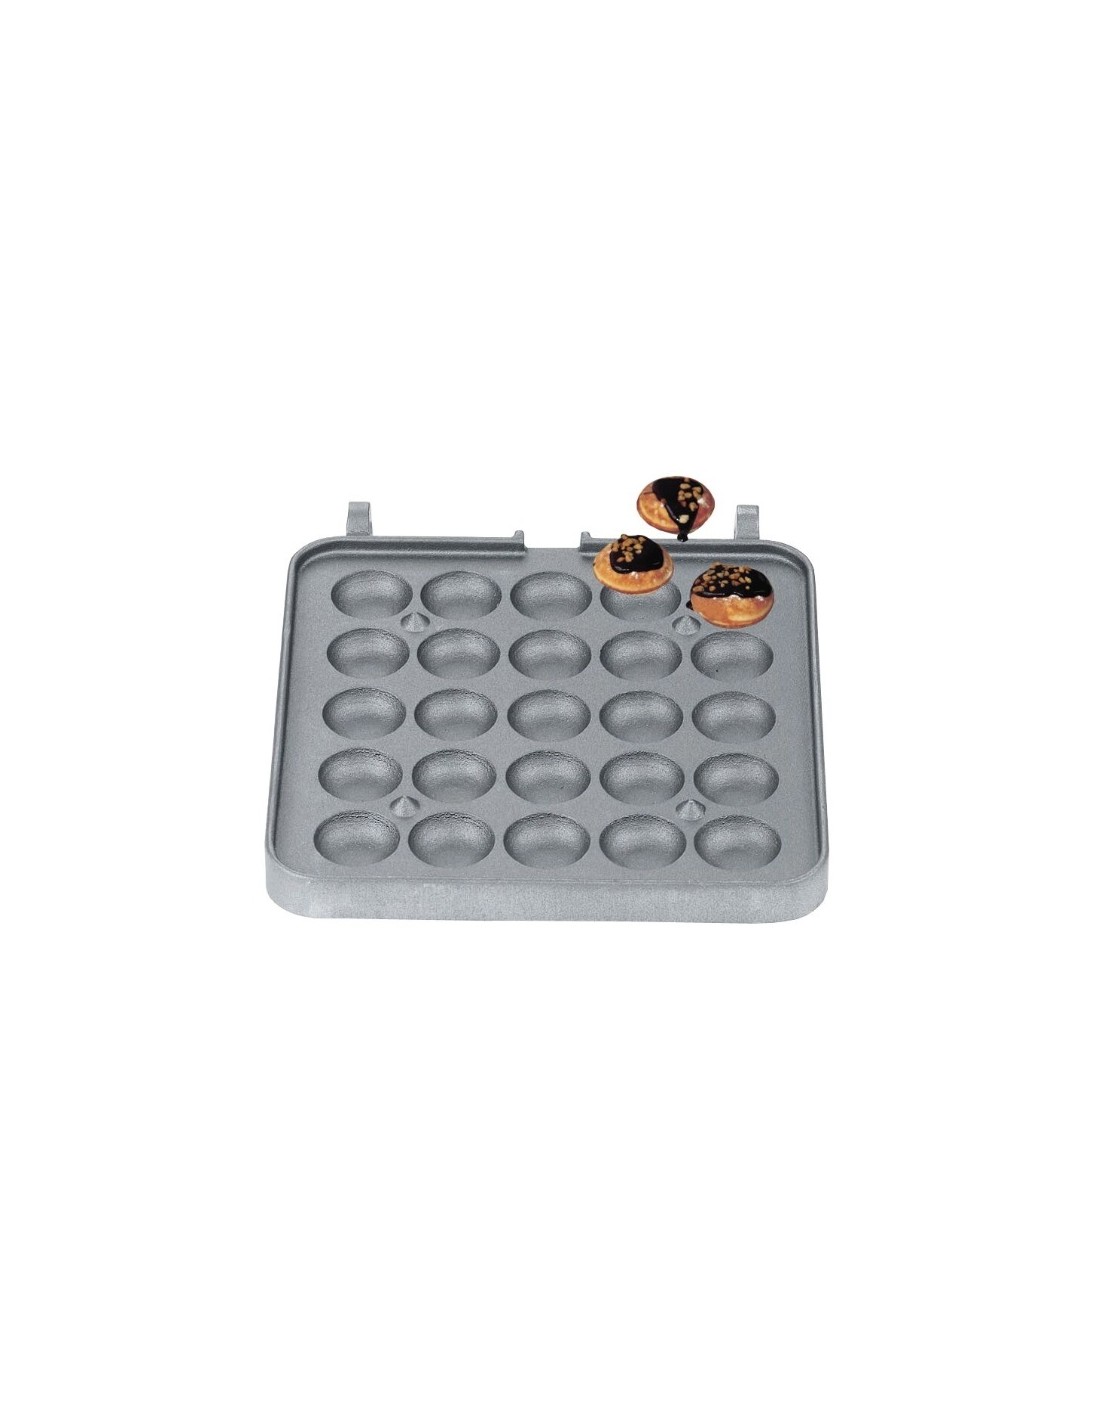 Interchangeable waffel plate - shape: 25 ball waffles Ø 4 cm - made of non-stick teflonate aluminium